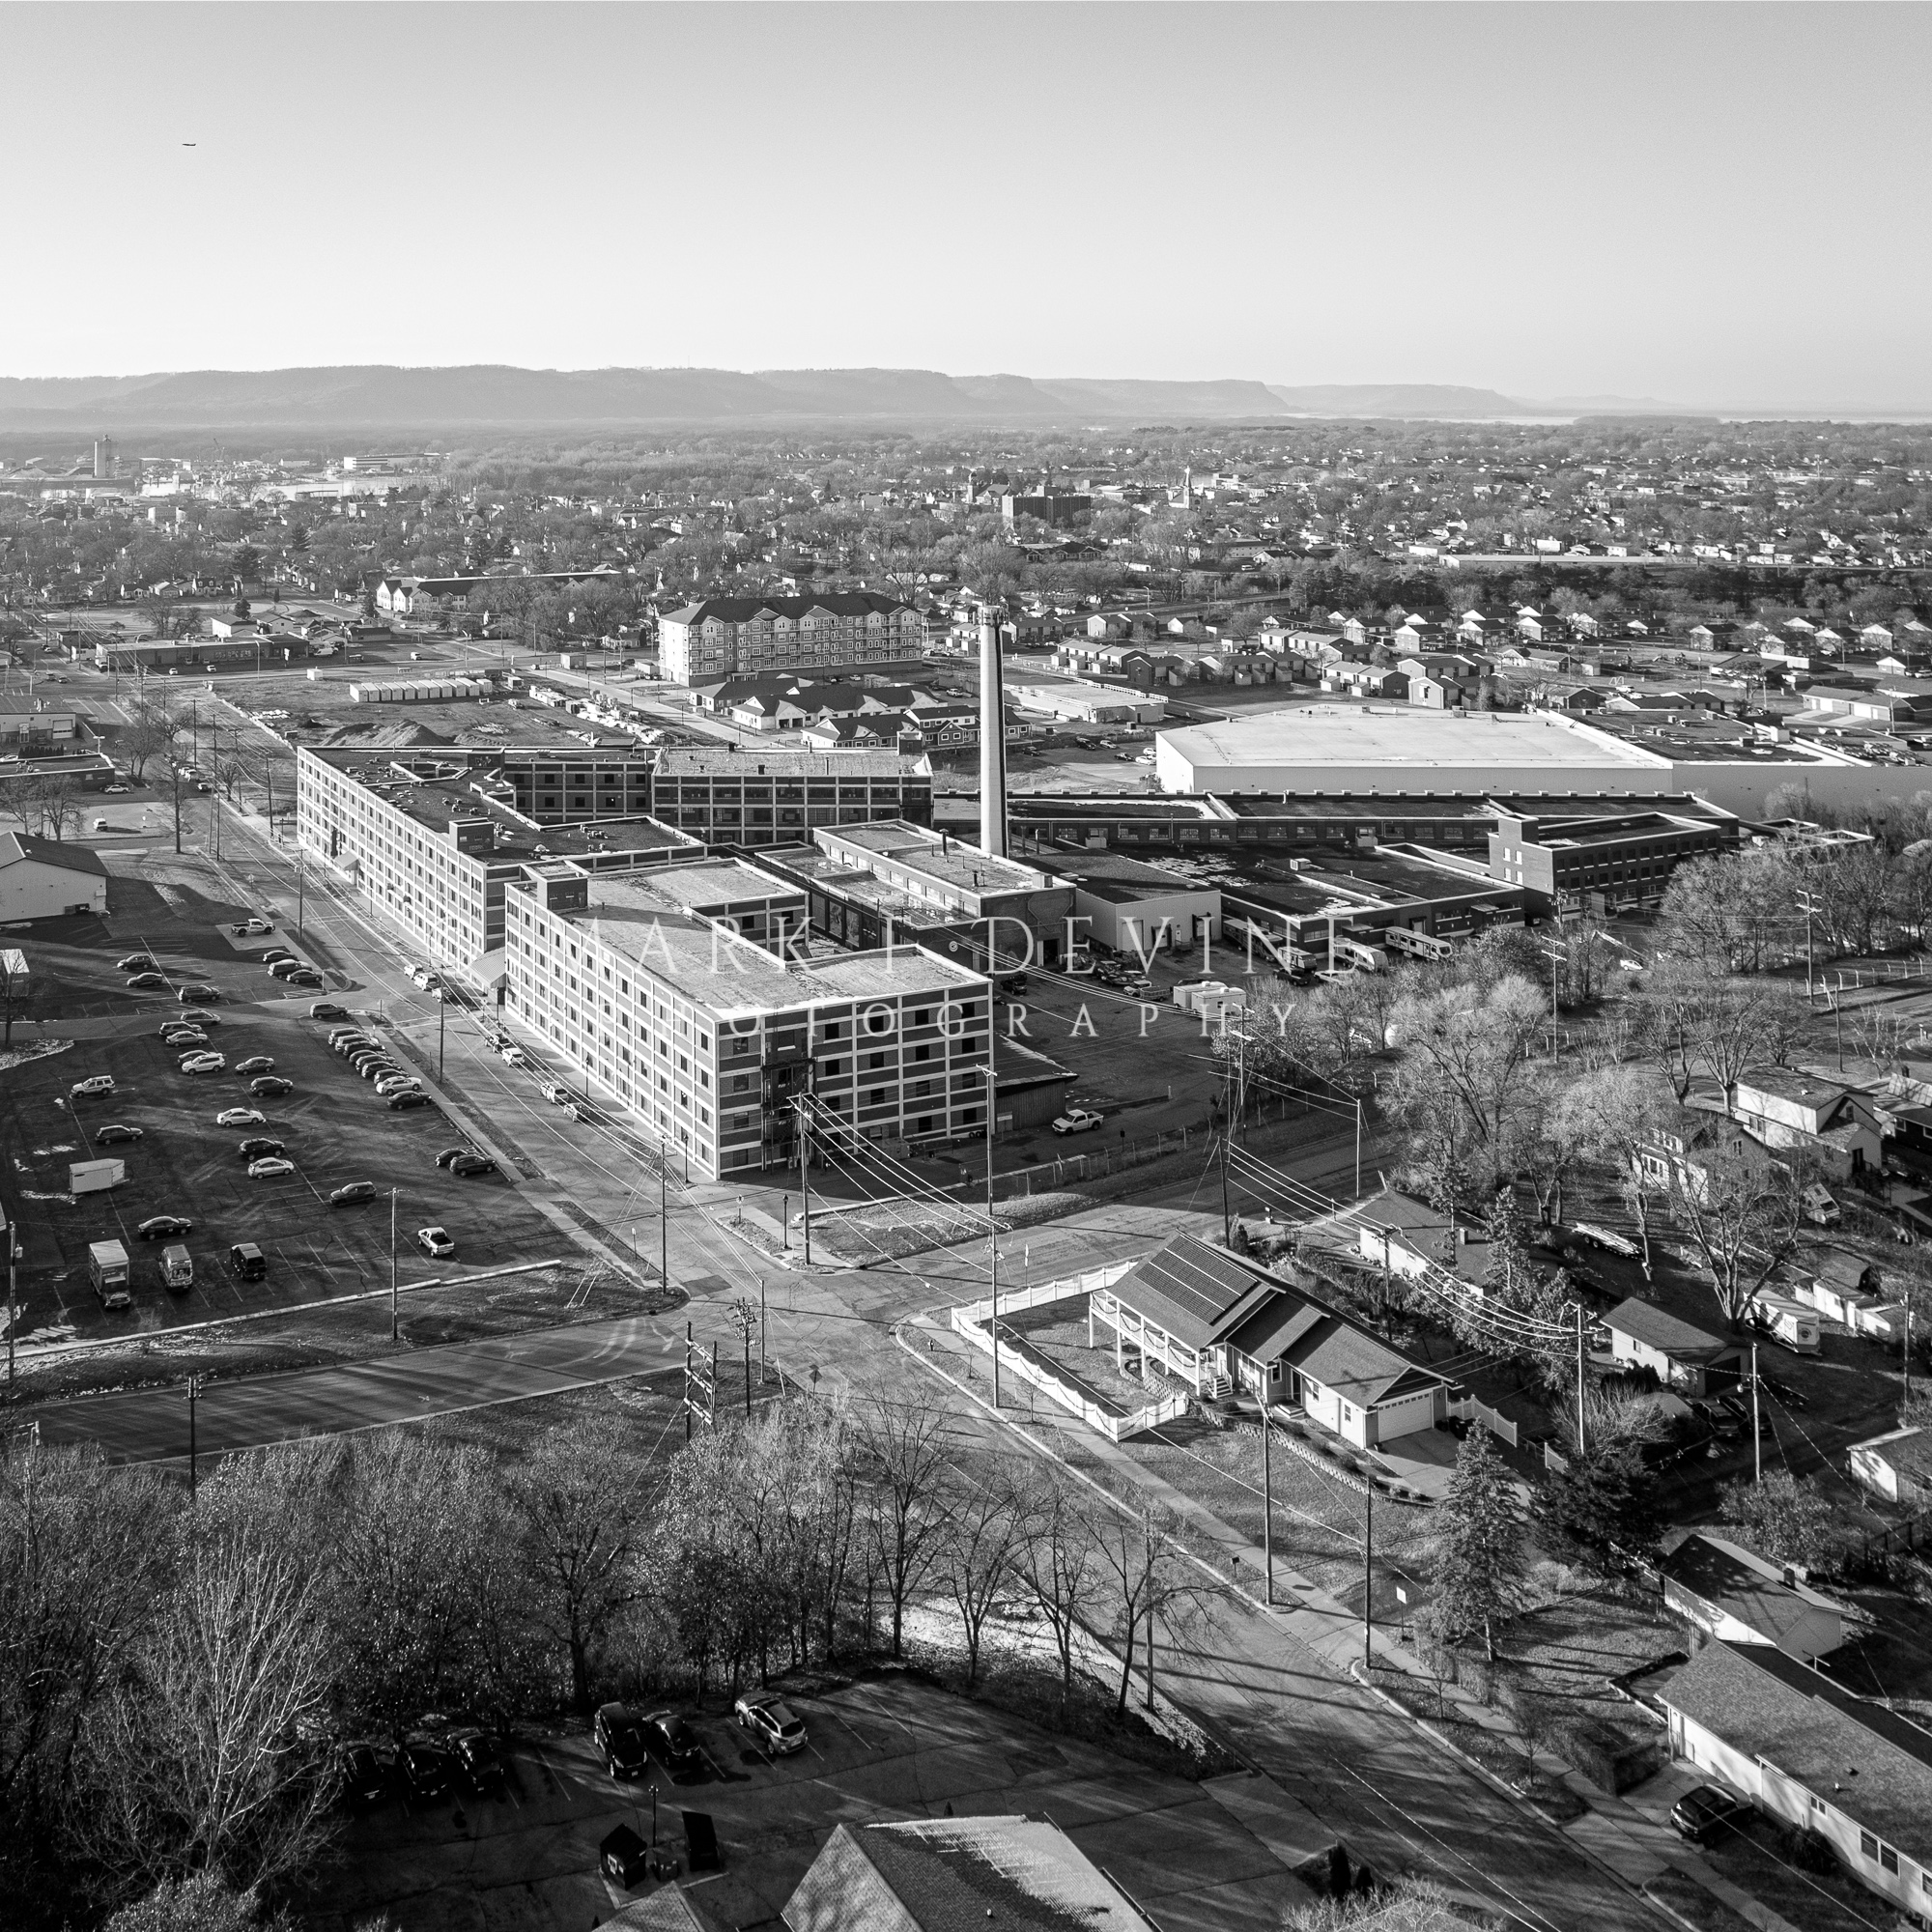 Aerial image of the Rubber Mills complex in La Crosse, Wisconsin.